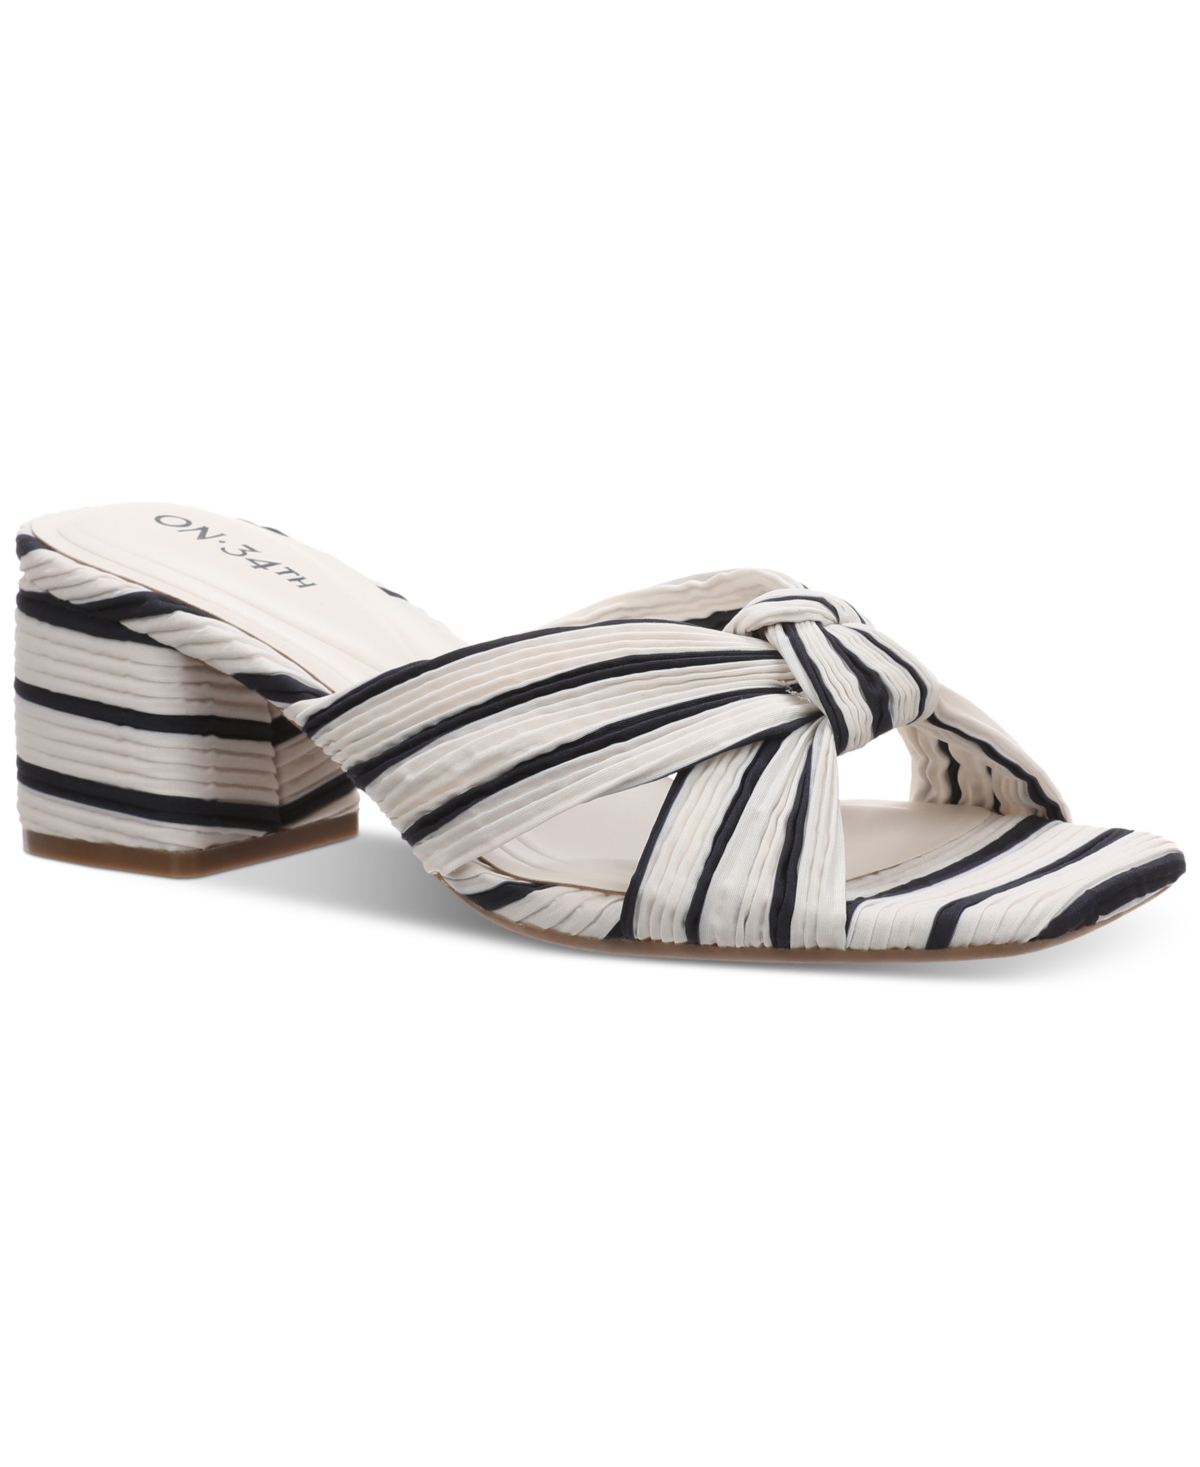 Women's Gaiaa Bow Block-Heel Dress Sandals, Created for Macy's - Navy Stripe Fabric